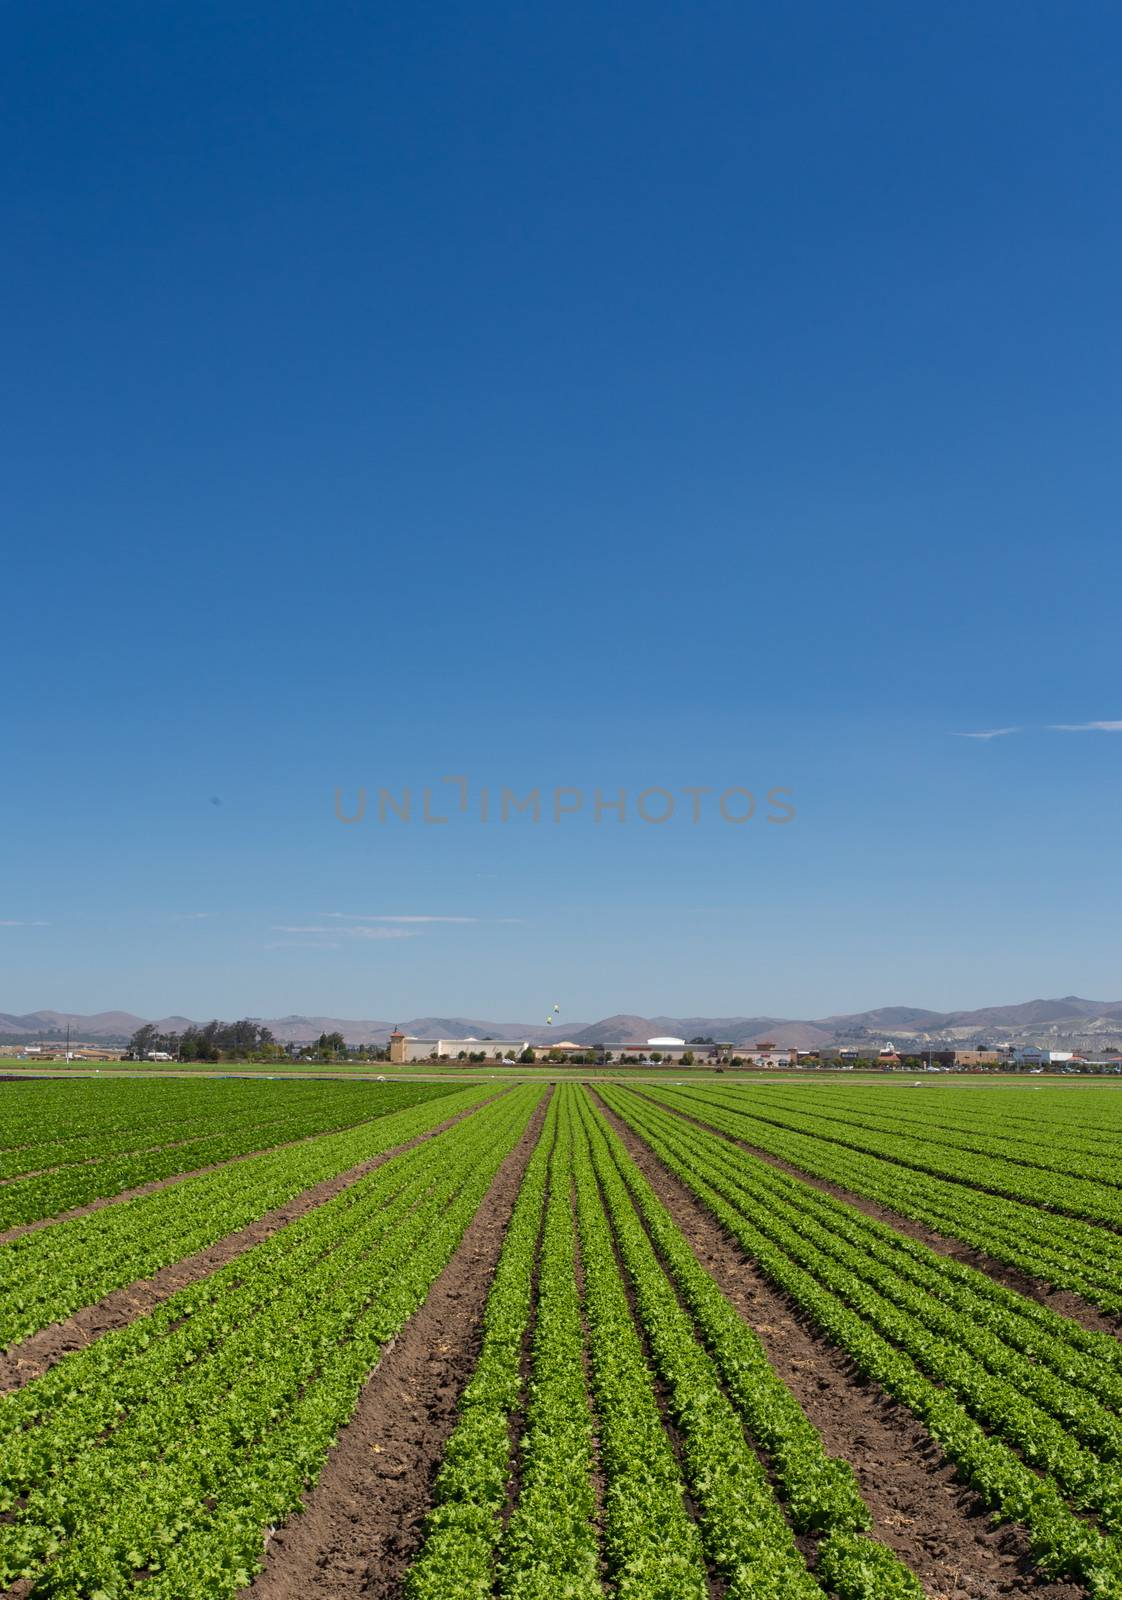 Lettuce Field Panorama by wolterk